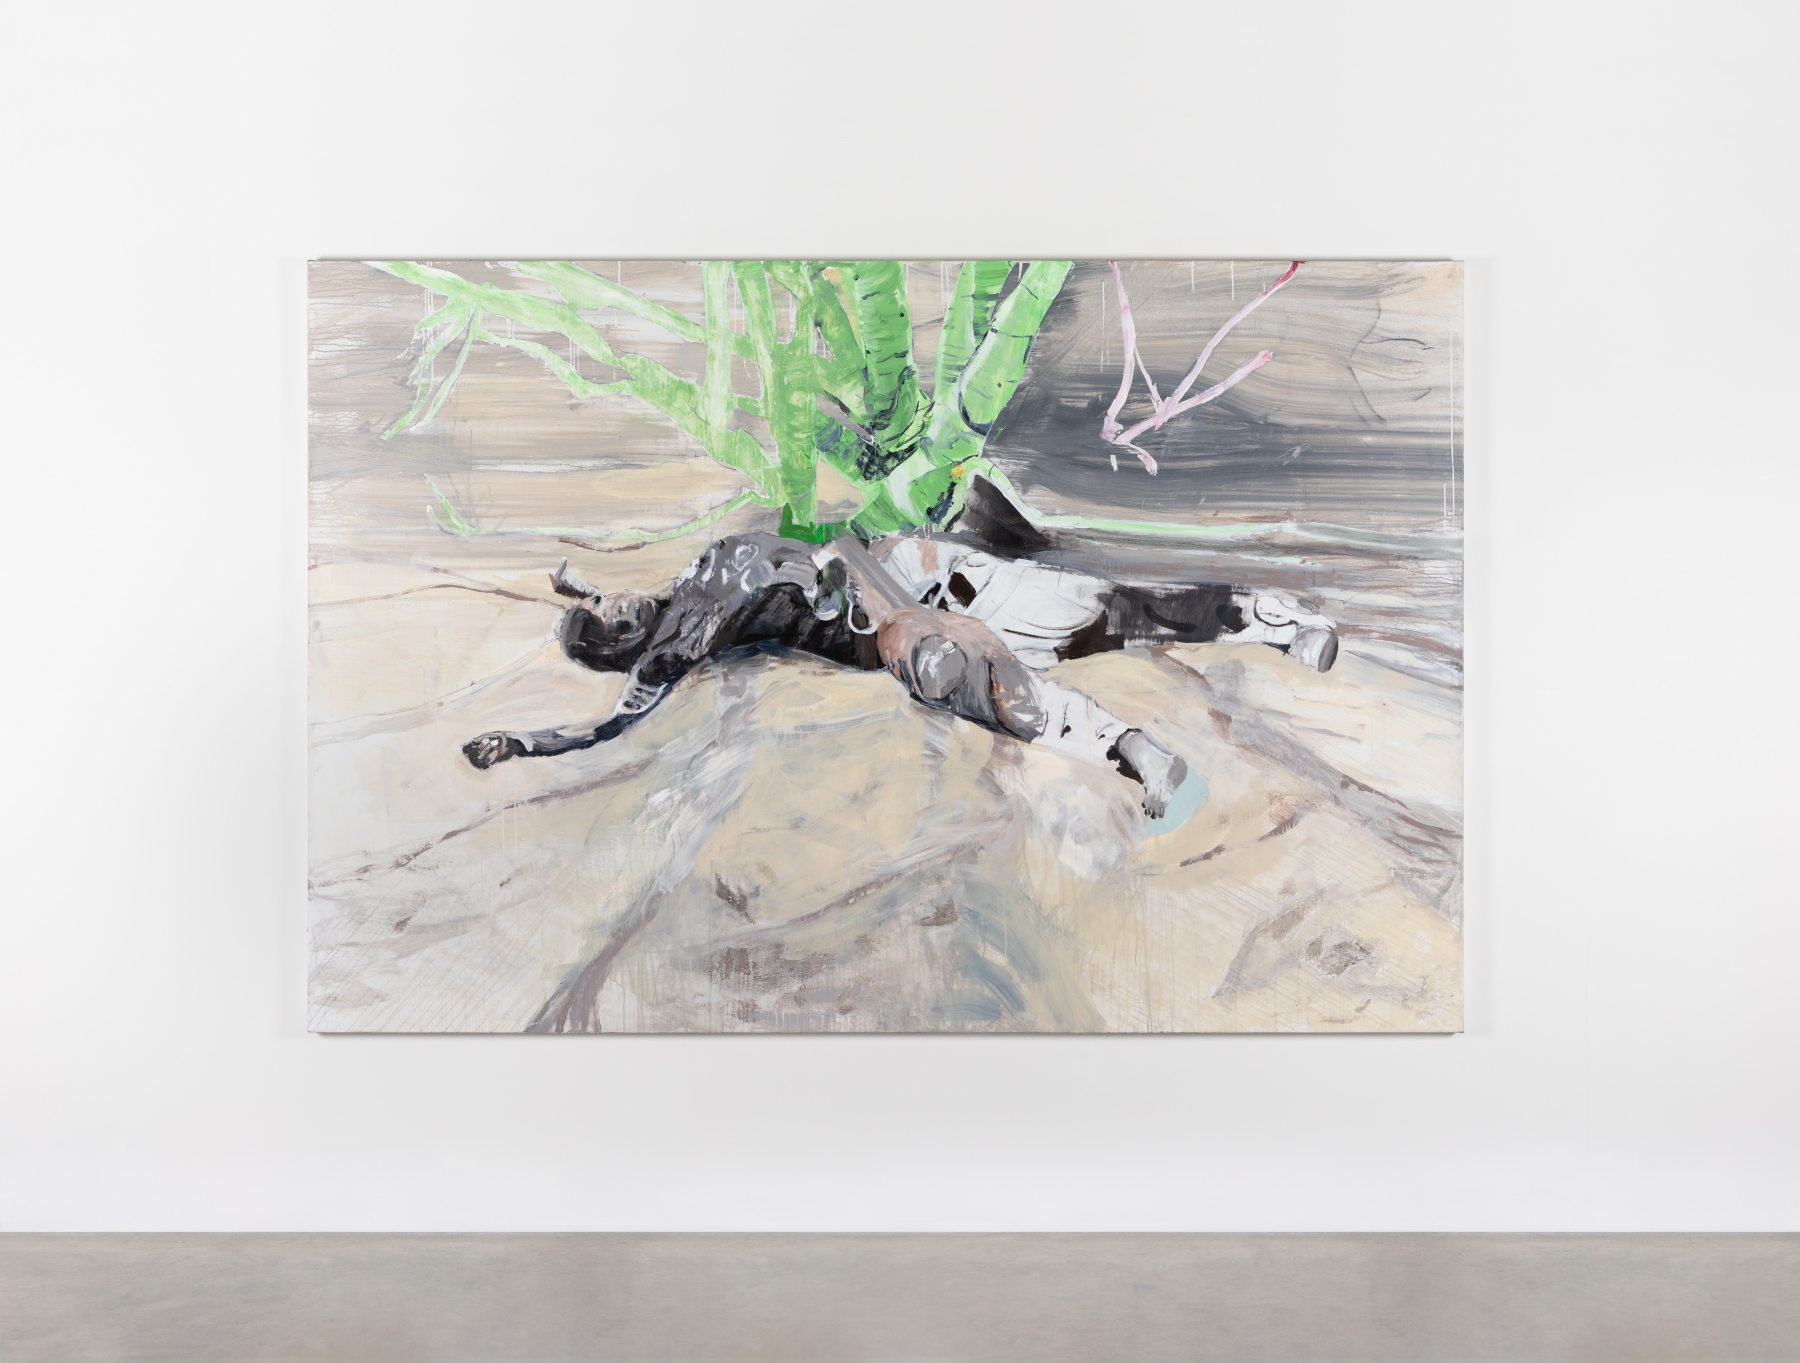 Brian Maguire
Arizona 4
2020
acrylic on canvas
200 x 300 cm / 78.7 x 118.1 in&nbsp;